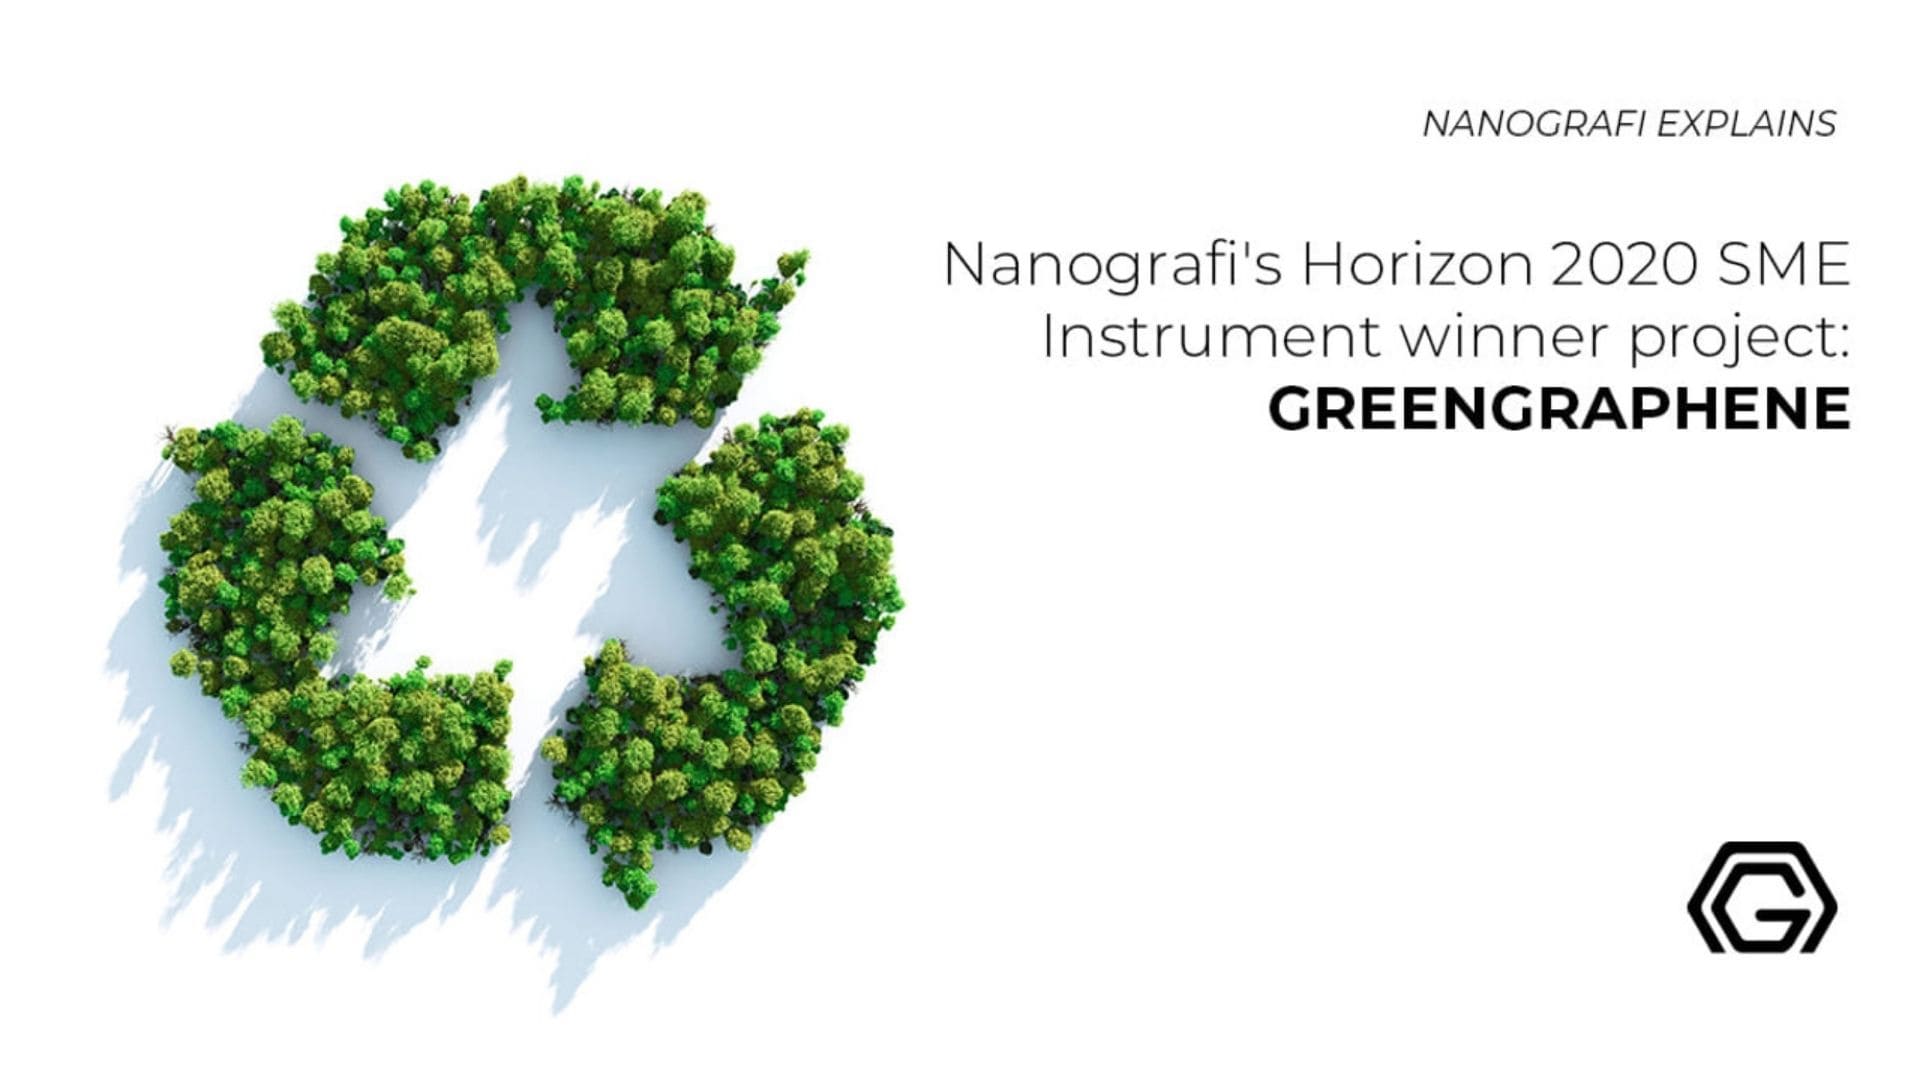 Nanografi's Horizon 2020 SME Instrument winner project: GREENGRAPHENE